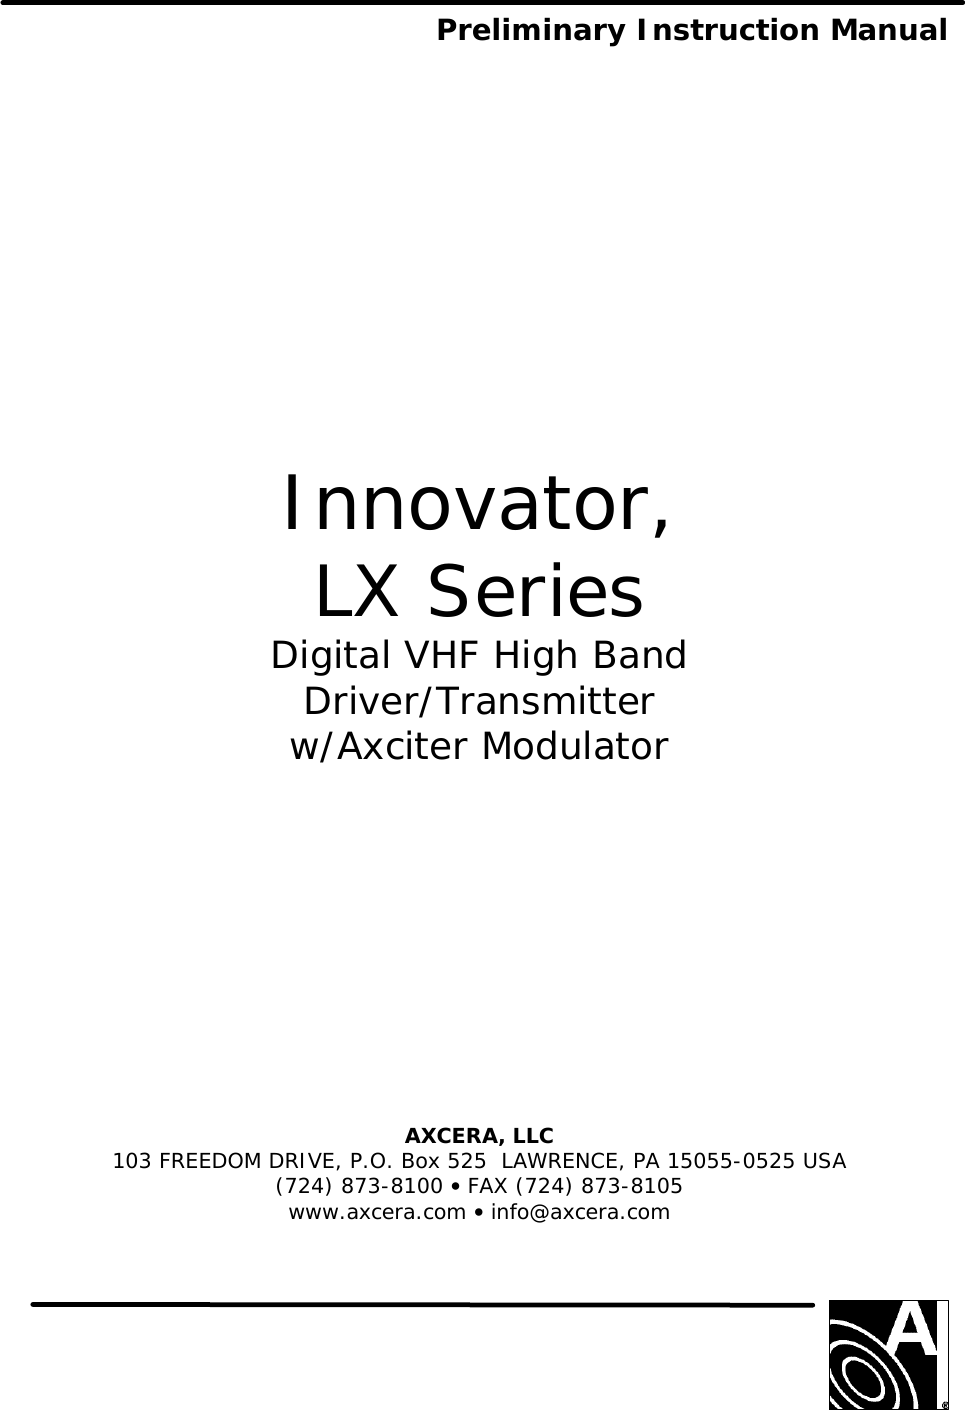  Preliminary Instruction Manual                  Innovator, LX Series Digital VHF High Band Driver/Transmitter w/Axciter Modulator            AXCERA, LLC  103 FREEDOM DRIVE, P.O. Box 525  LAWRENCE, PA 15055-0525 USA (724) 873-8100 • FAX (724) 873-8105 www.axcera.com • info@axcera.com      